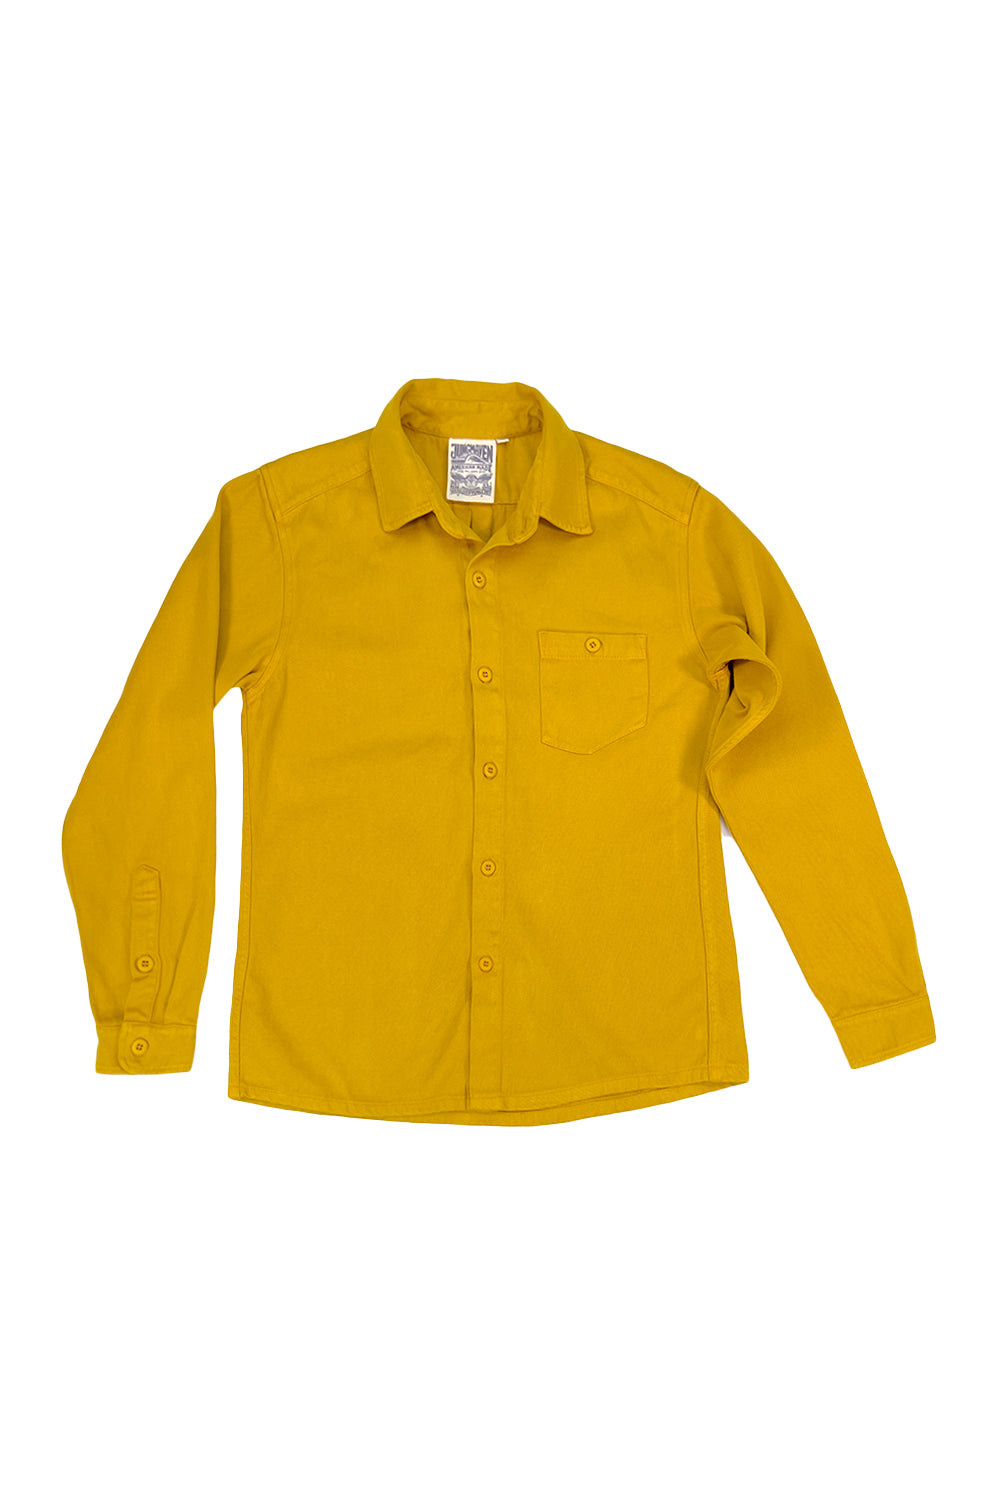 Topanga Shirt | Jungmaven Hemp Clothing & Accessories / Color: Spicy Mustard